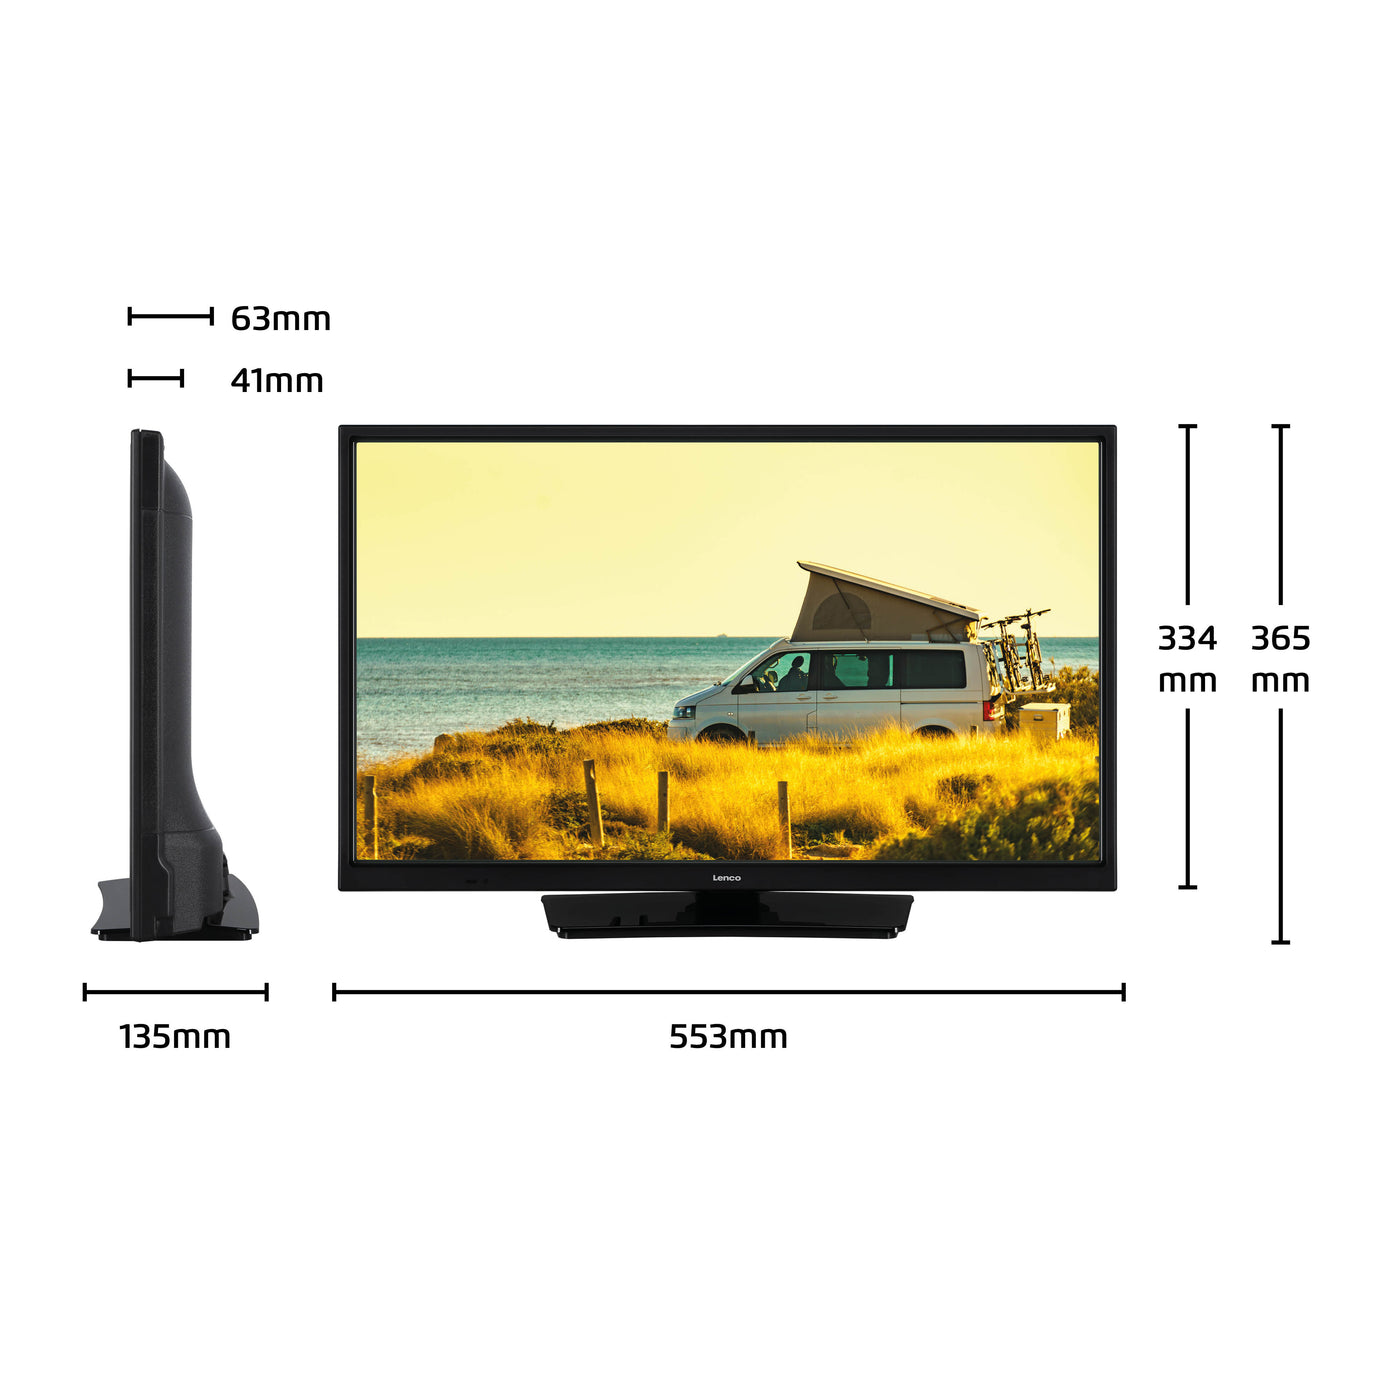 Lenco LED-2463BK - 24" Smart TV Android avec adaptateur voiture 12 V, noir